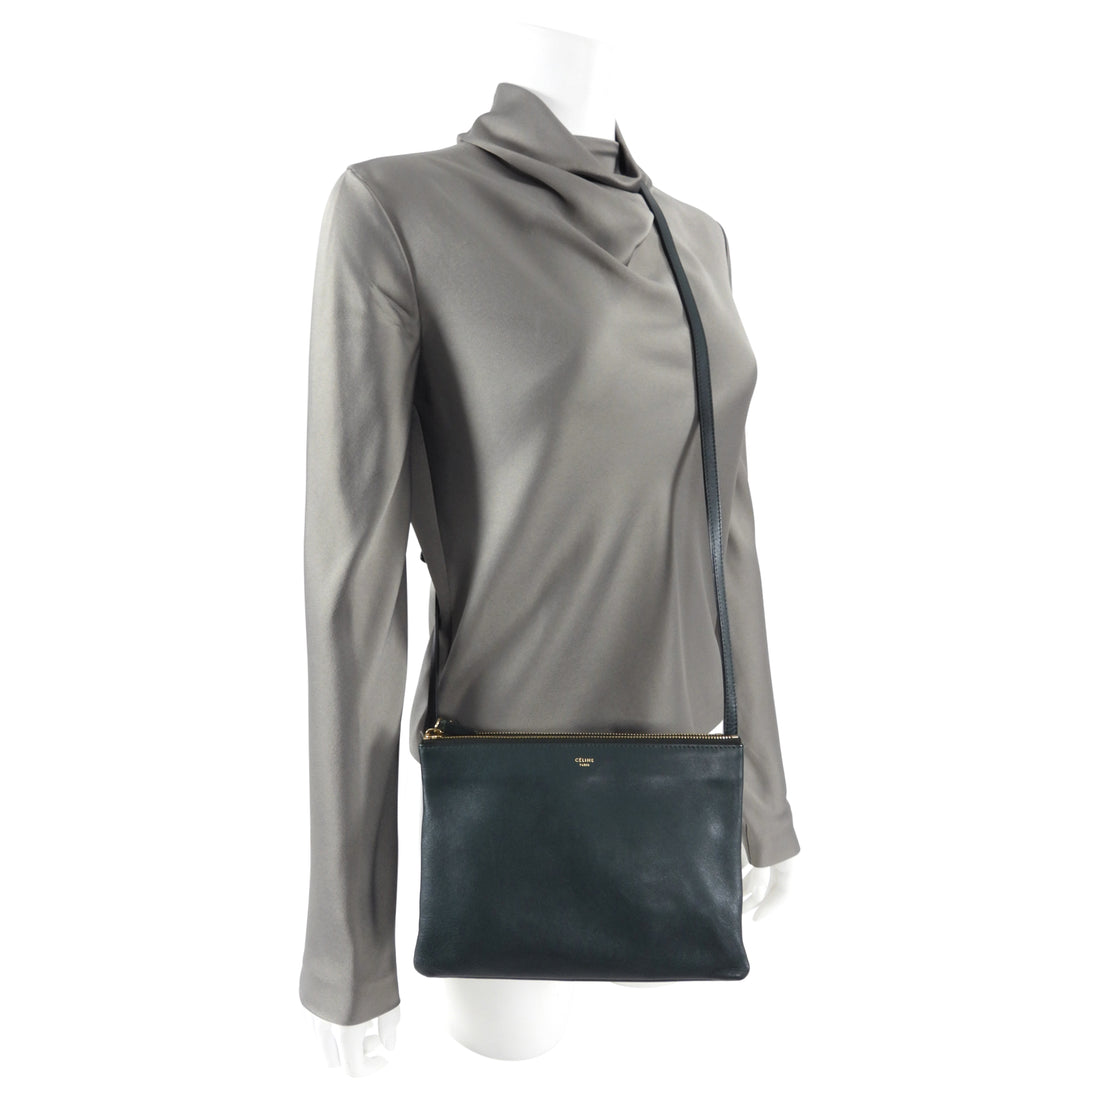 Trio leather crossbody bag Celine Grey in Leather - 31055070